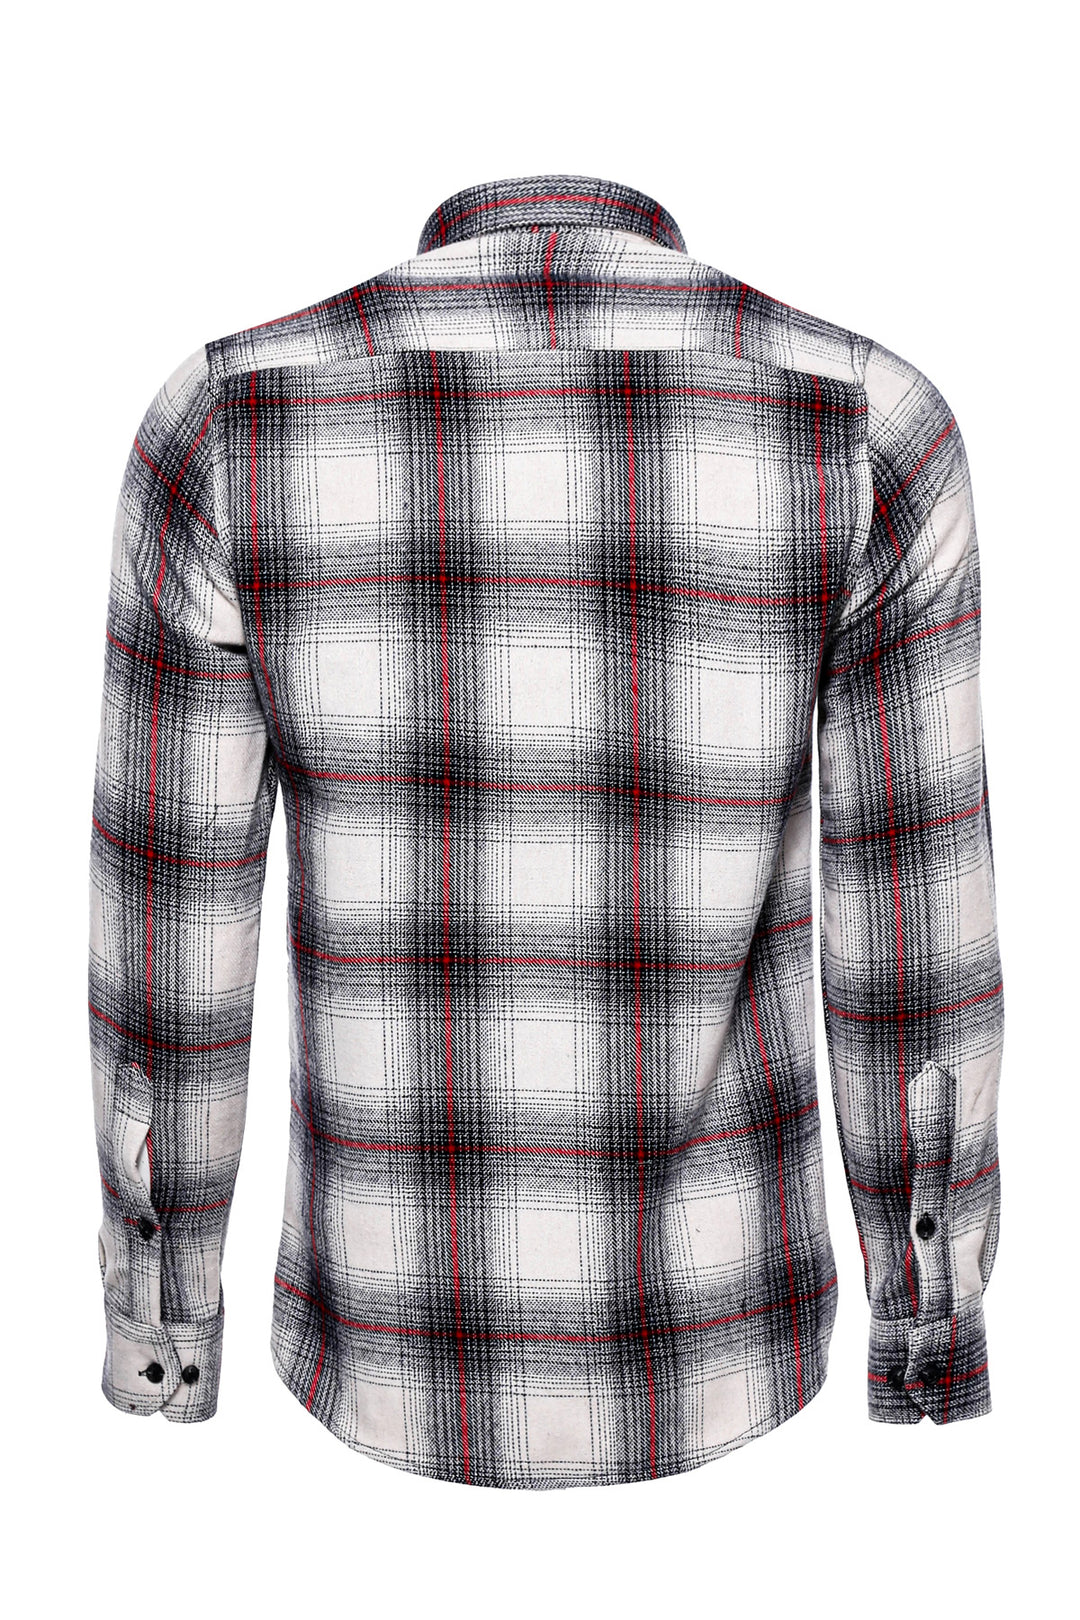 Thick Checked Grey Men Lumberjack Shirt - Wessi